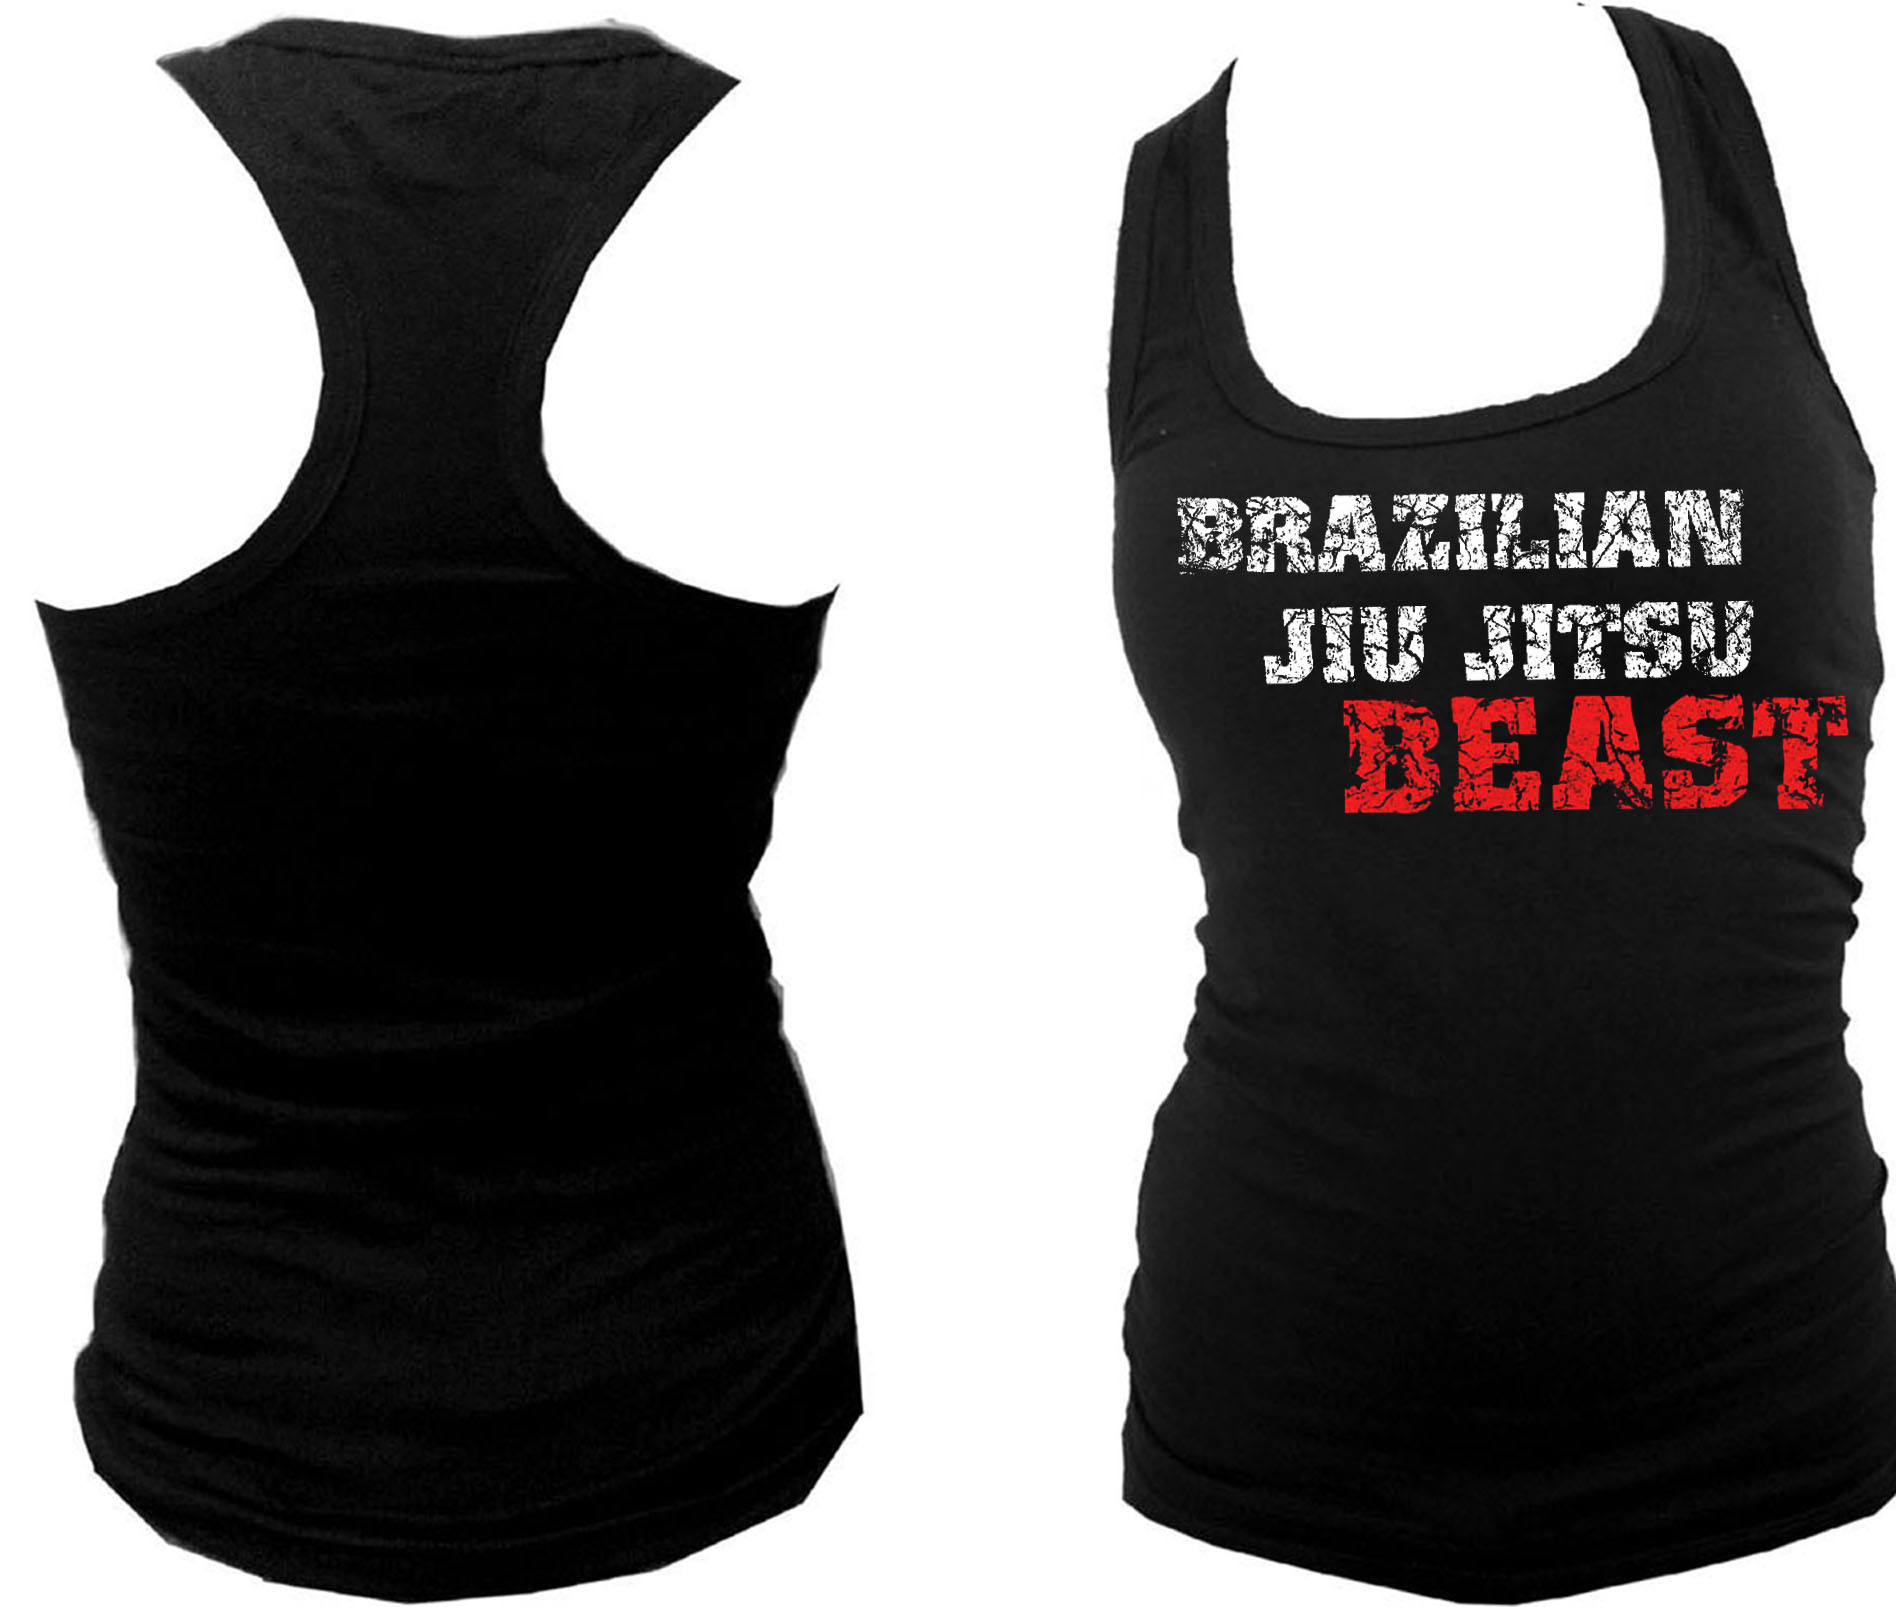 Brazilian jiu jitsu beast women racerback black tank top S/M